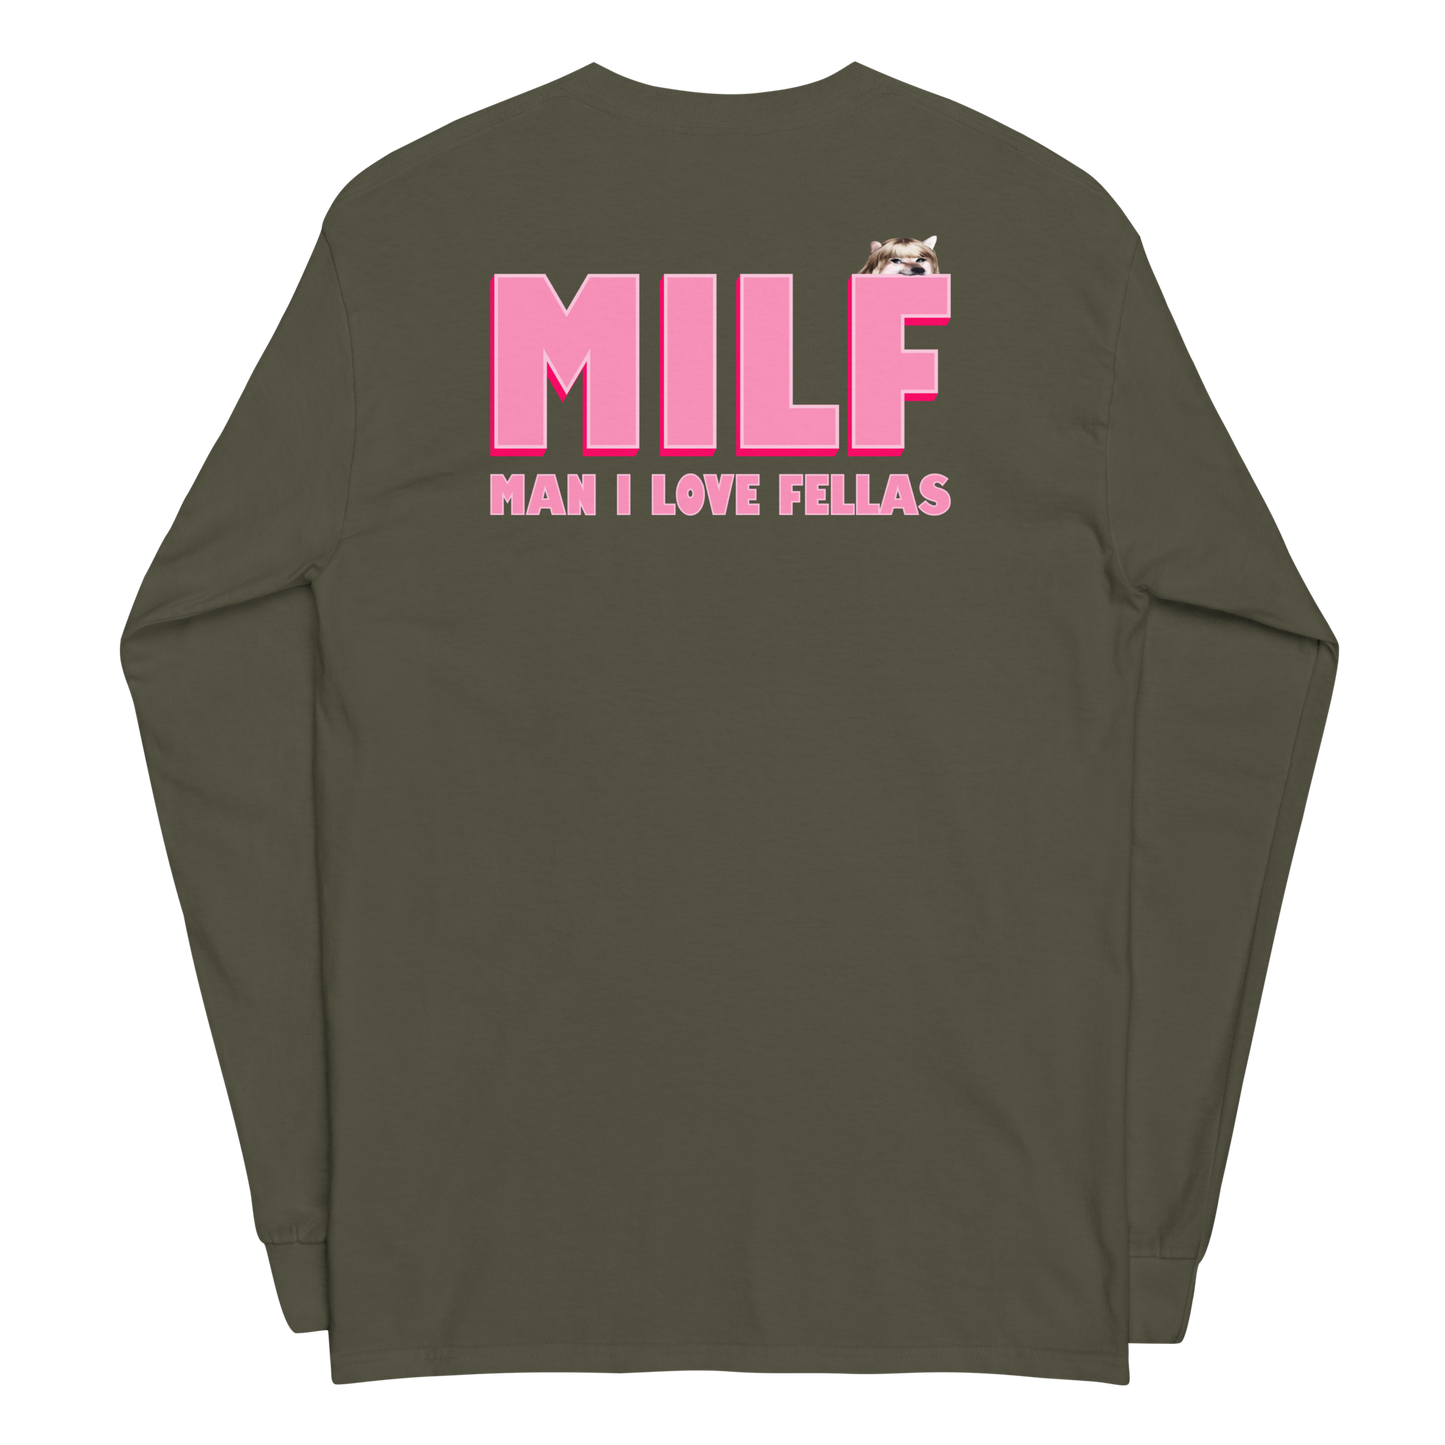 NAFO Man I Love Fellas (MILF) Long Sleeve T-Shirt